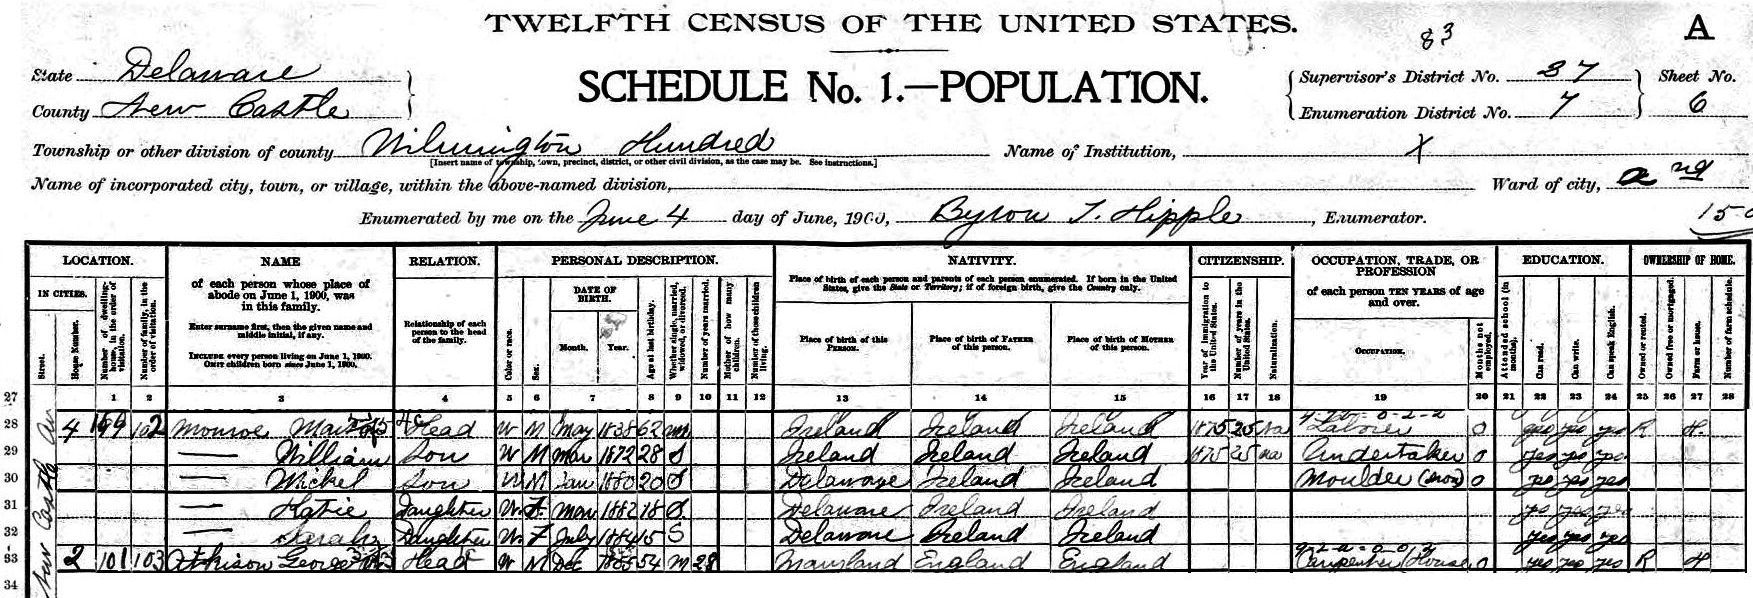 1900 Census 100 NewCastle Ave Martin Munroe Family